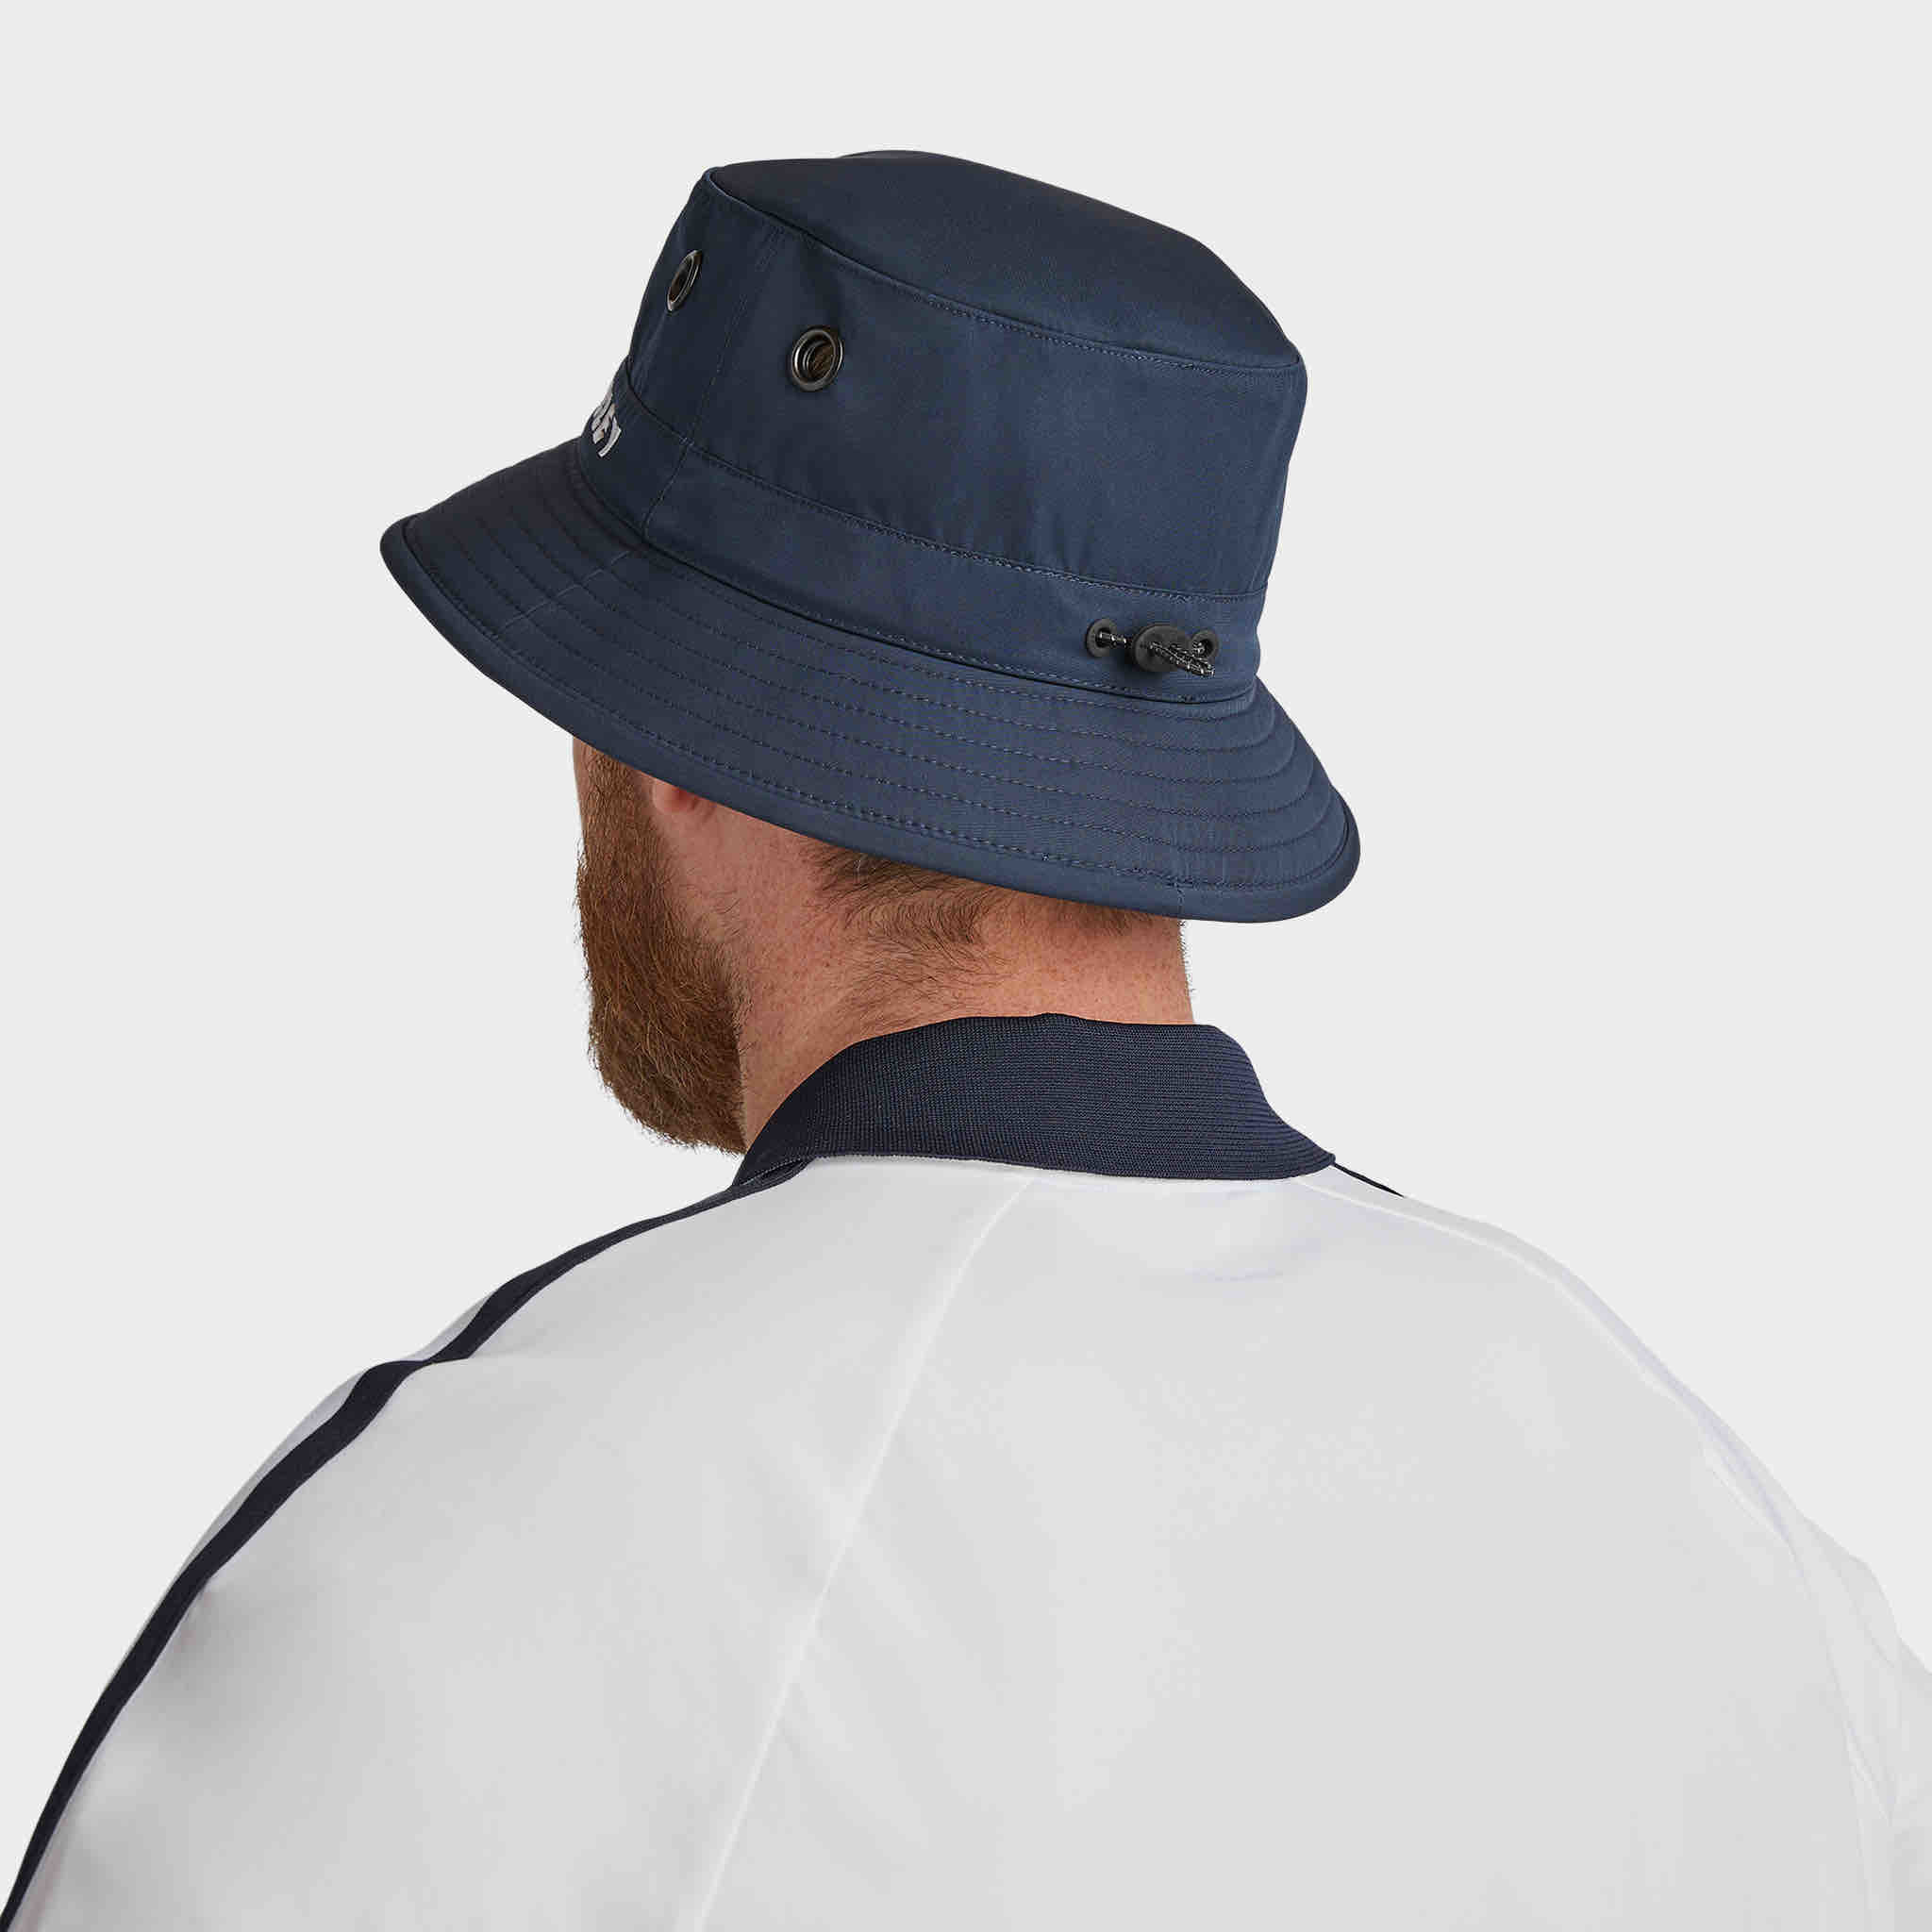 New Bucket Hat White L/XL Golf Clothing